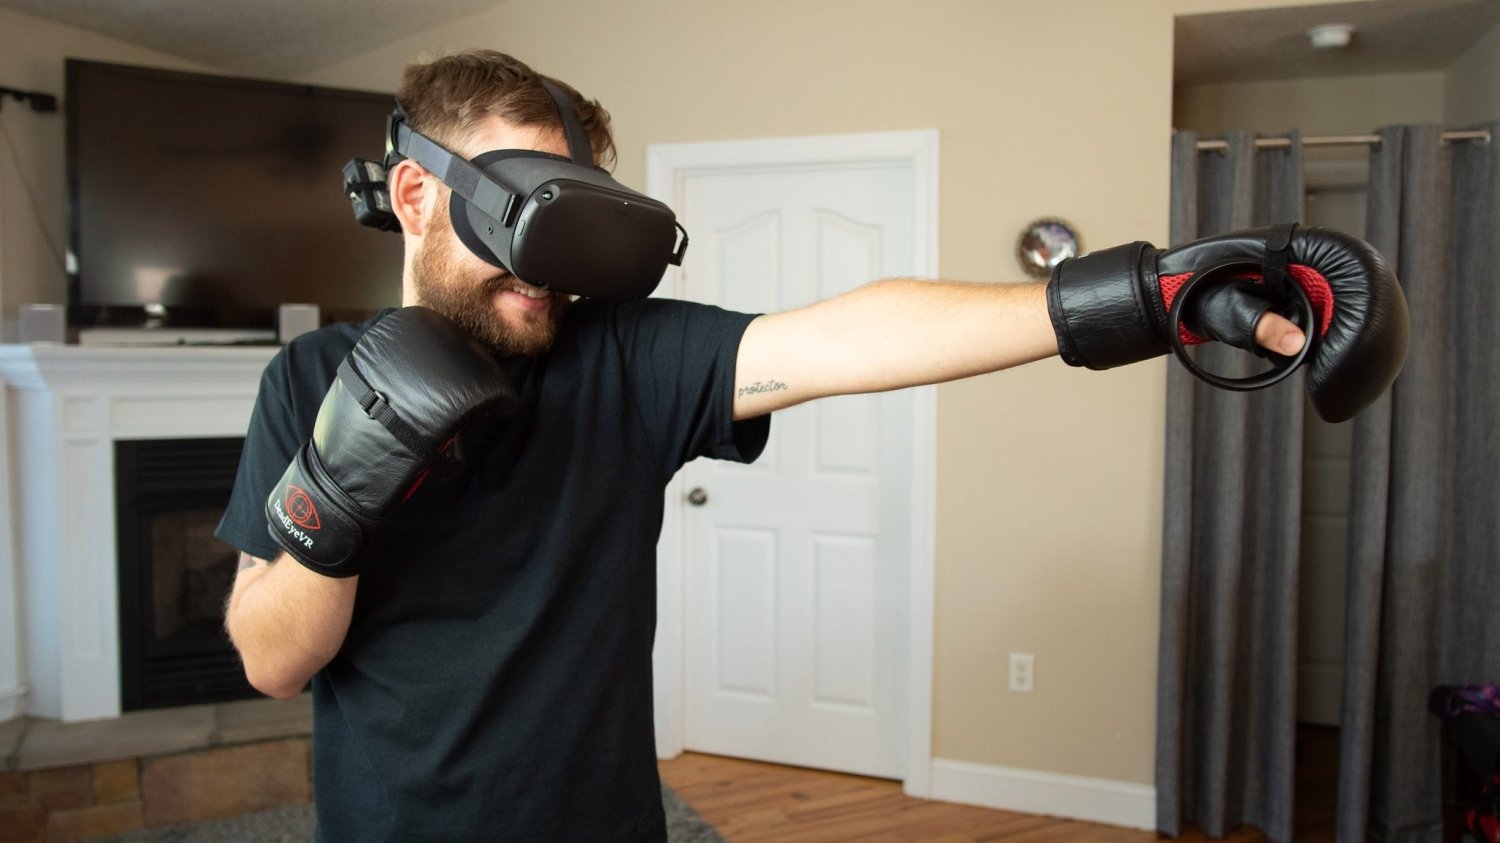 oculus quest boxing